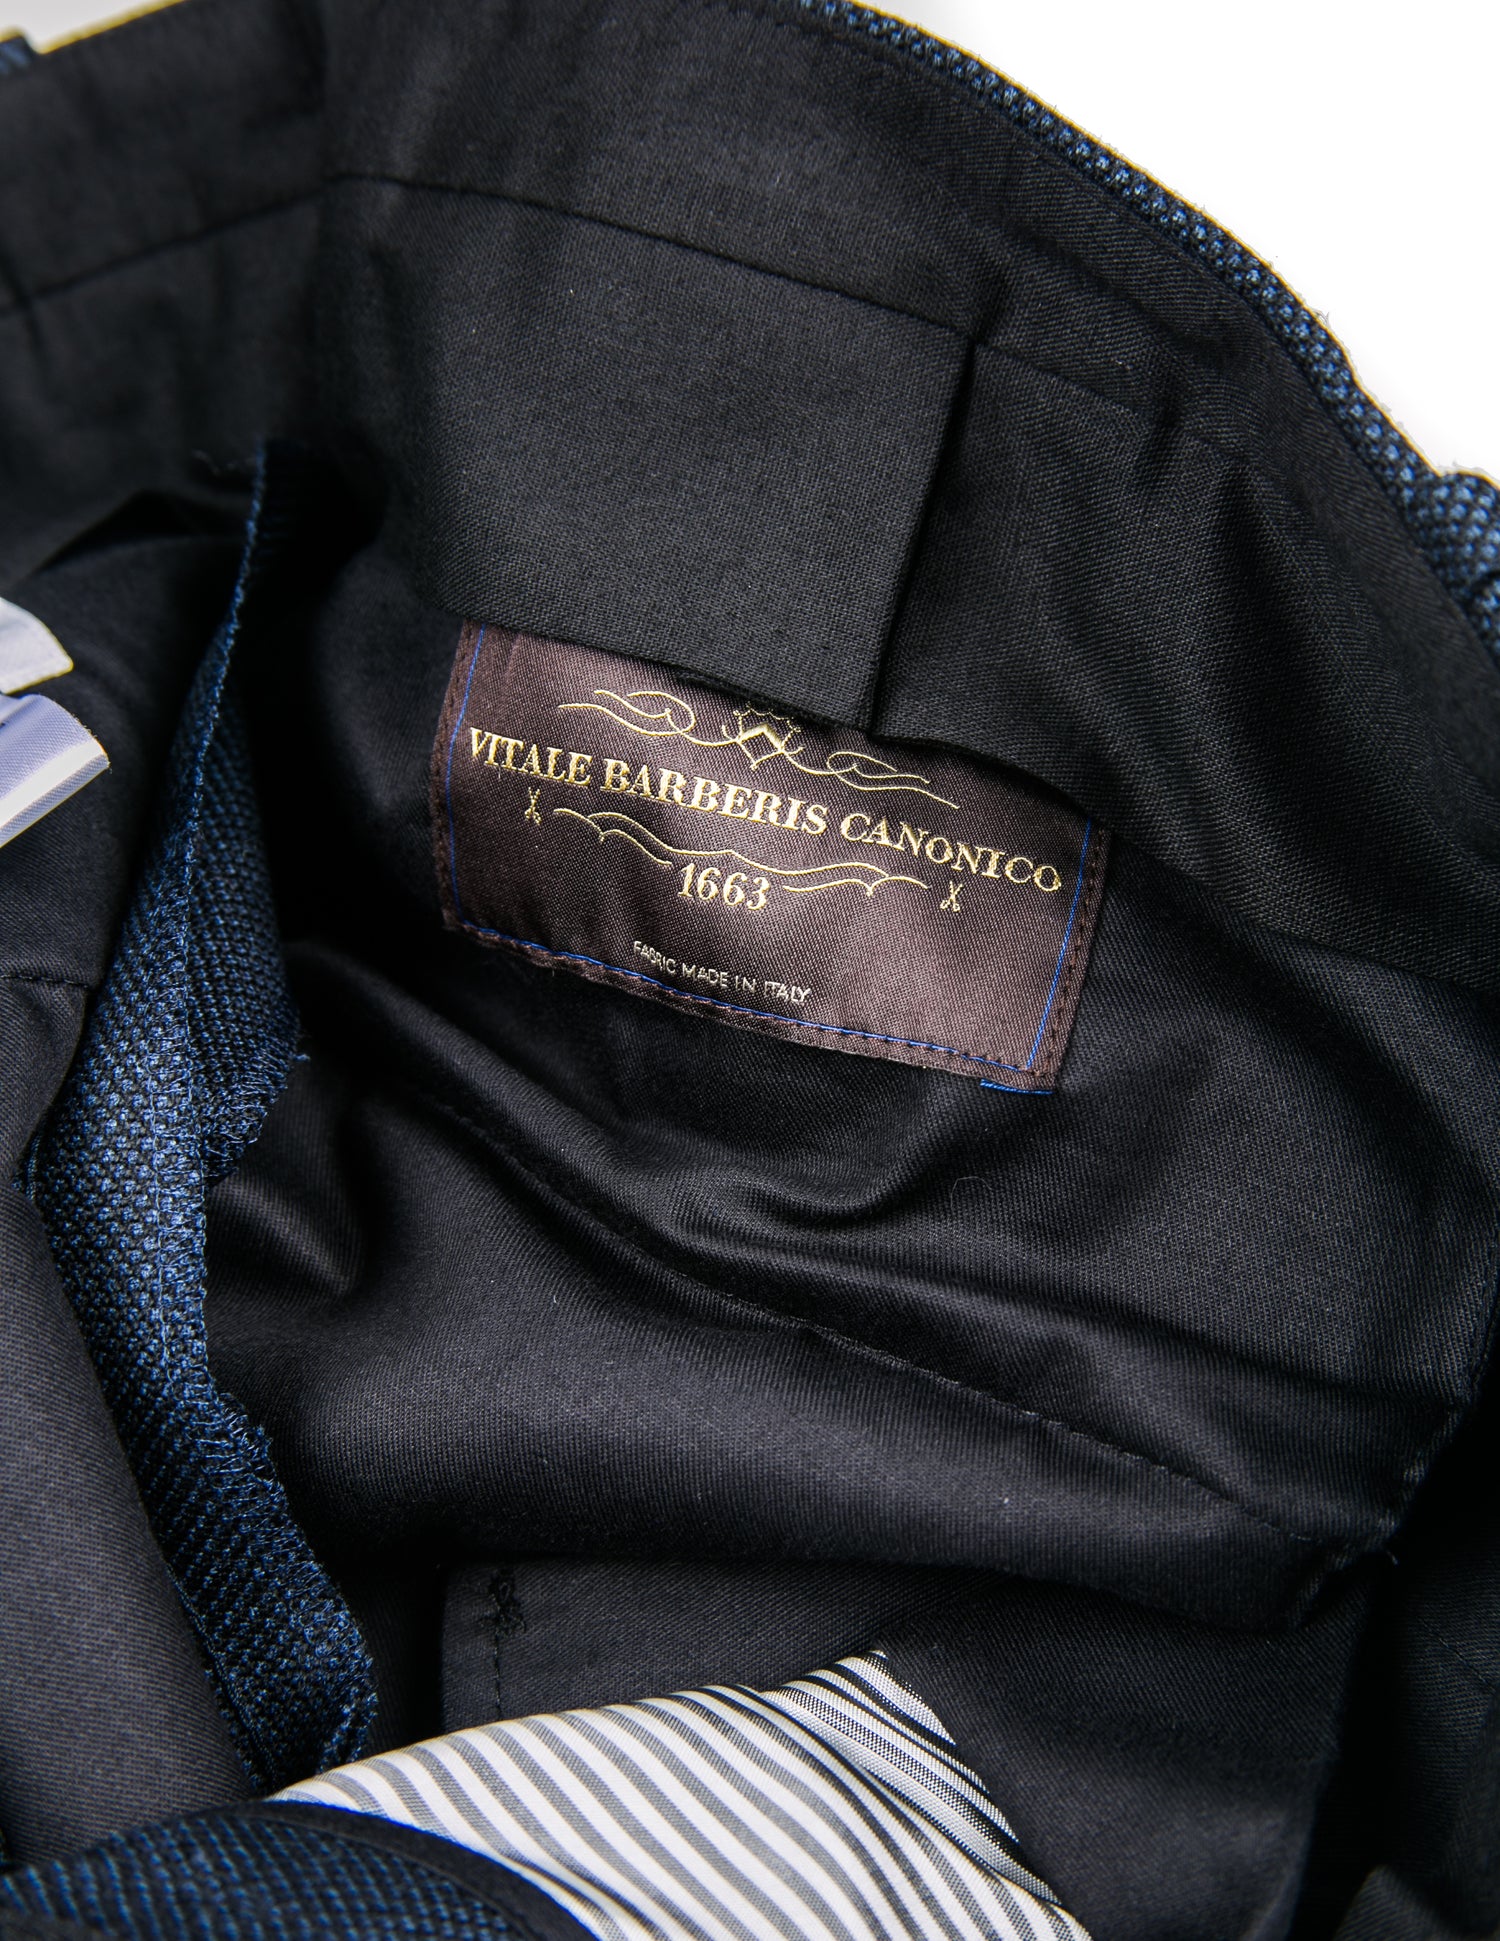 Detail of BKT50 Tailored Trouser in Birdseye Weave - Navy showing labels